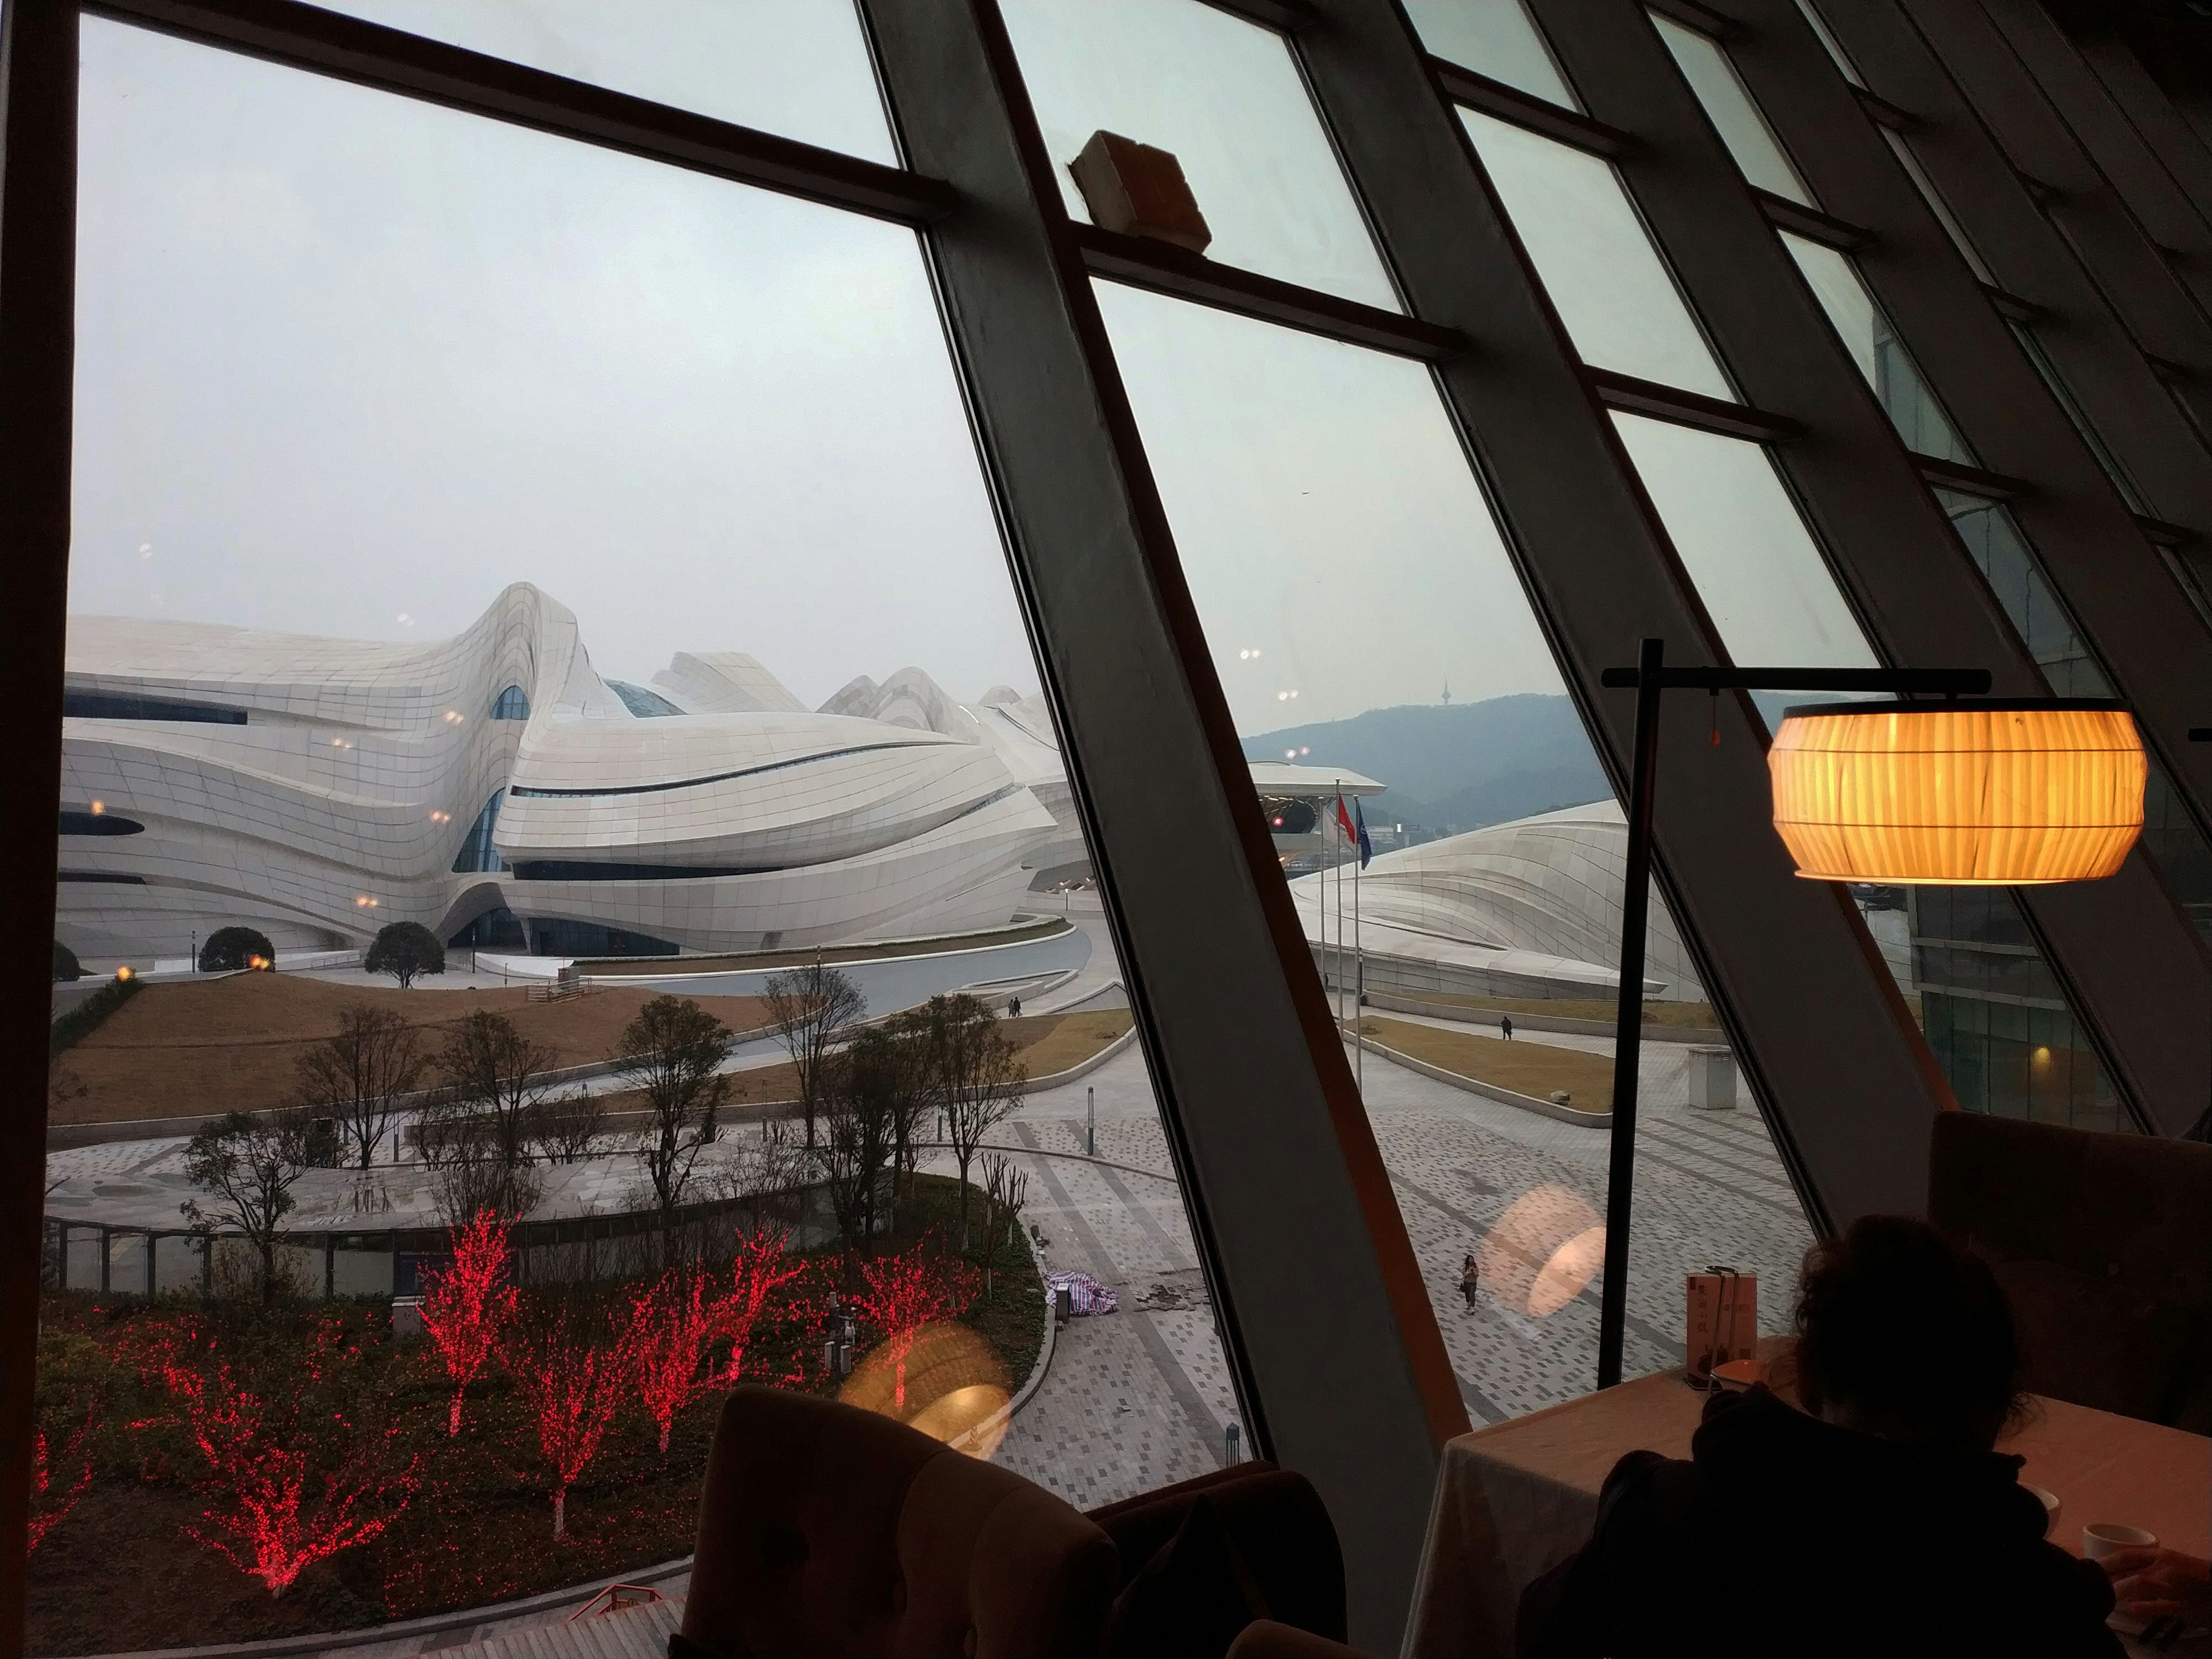 Changsha Meixihu International Culture and Art Center, a Zaha Hadid Architects building, from a lakeside restaurant.